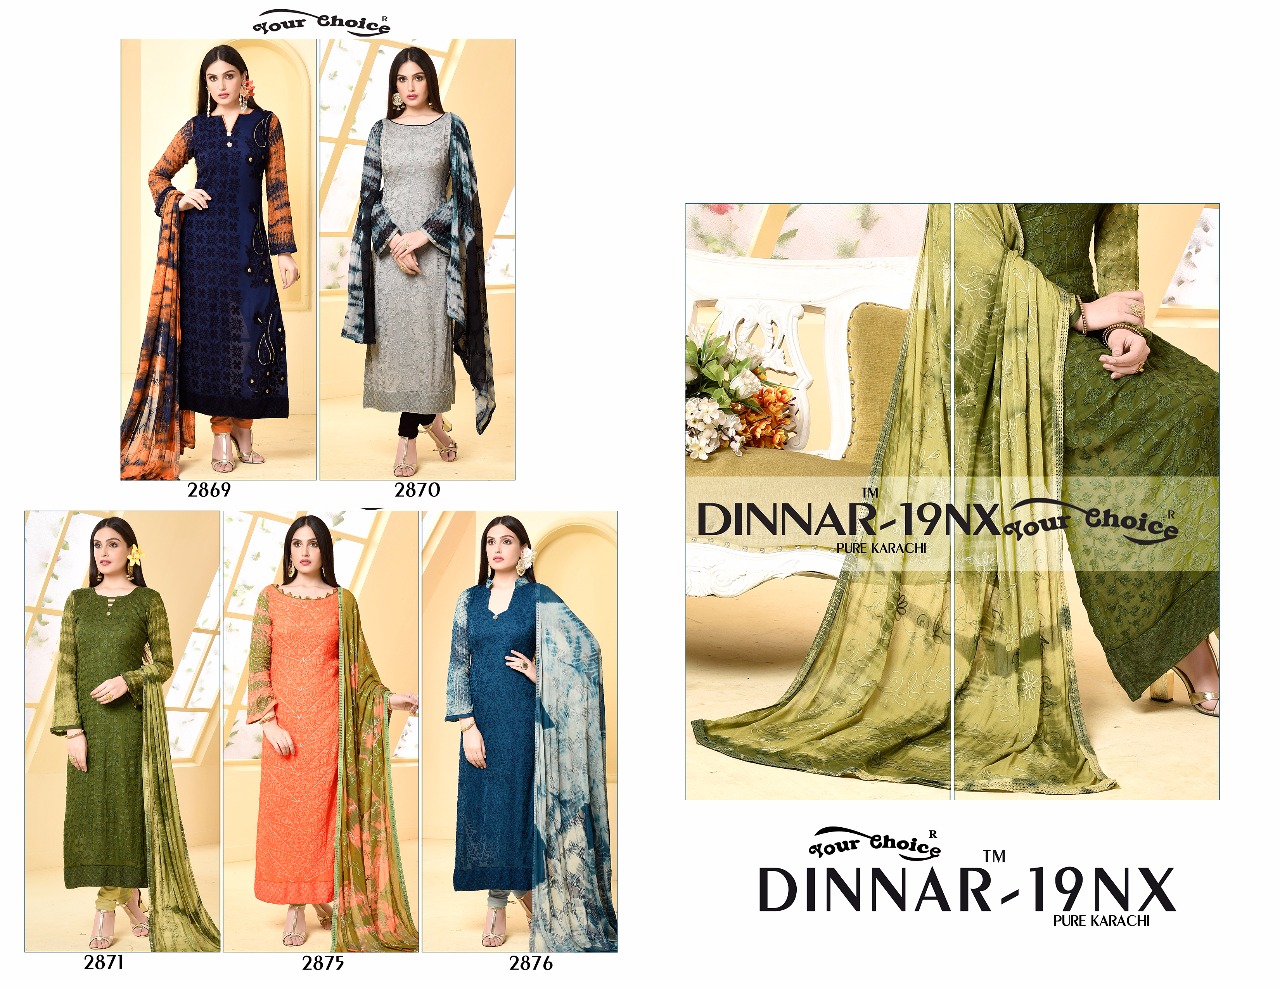 Your choice launching dinnar tM 19 nX casual wear salwar kameez